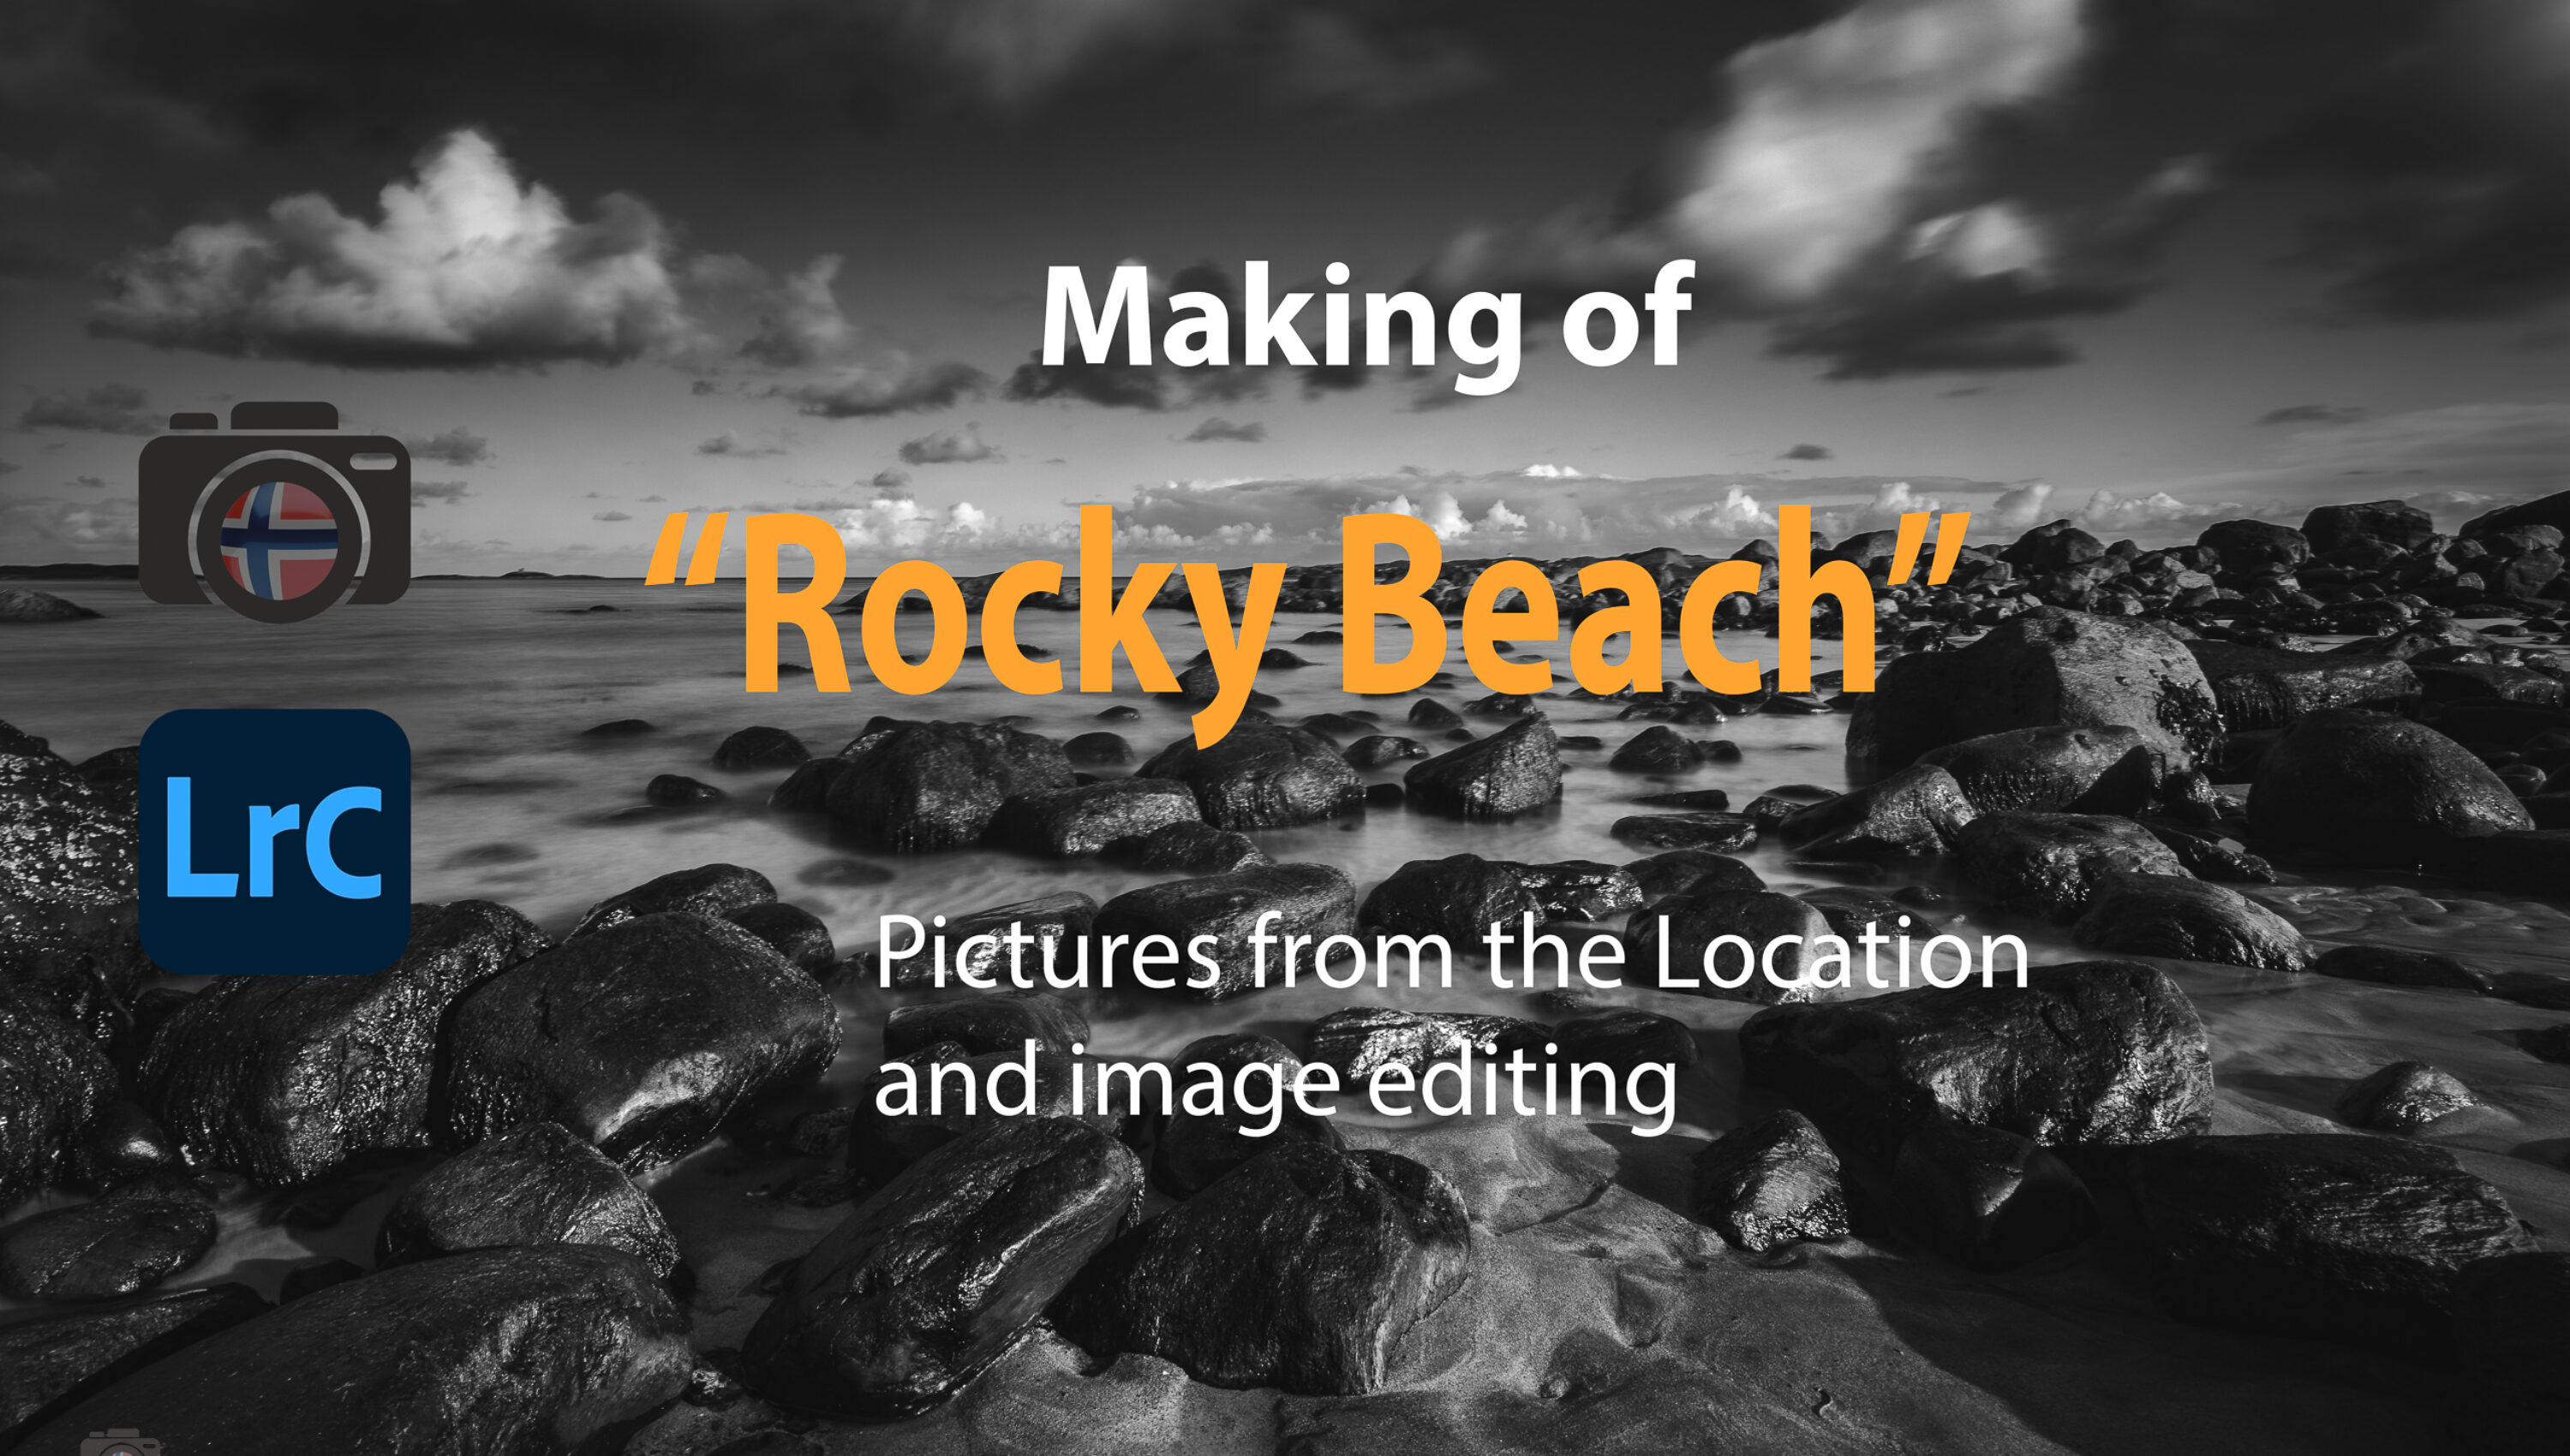 Making of: “Rocky beach”